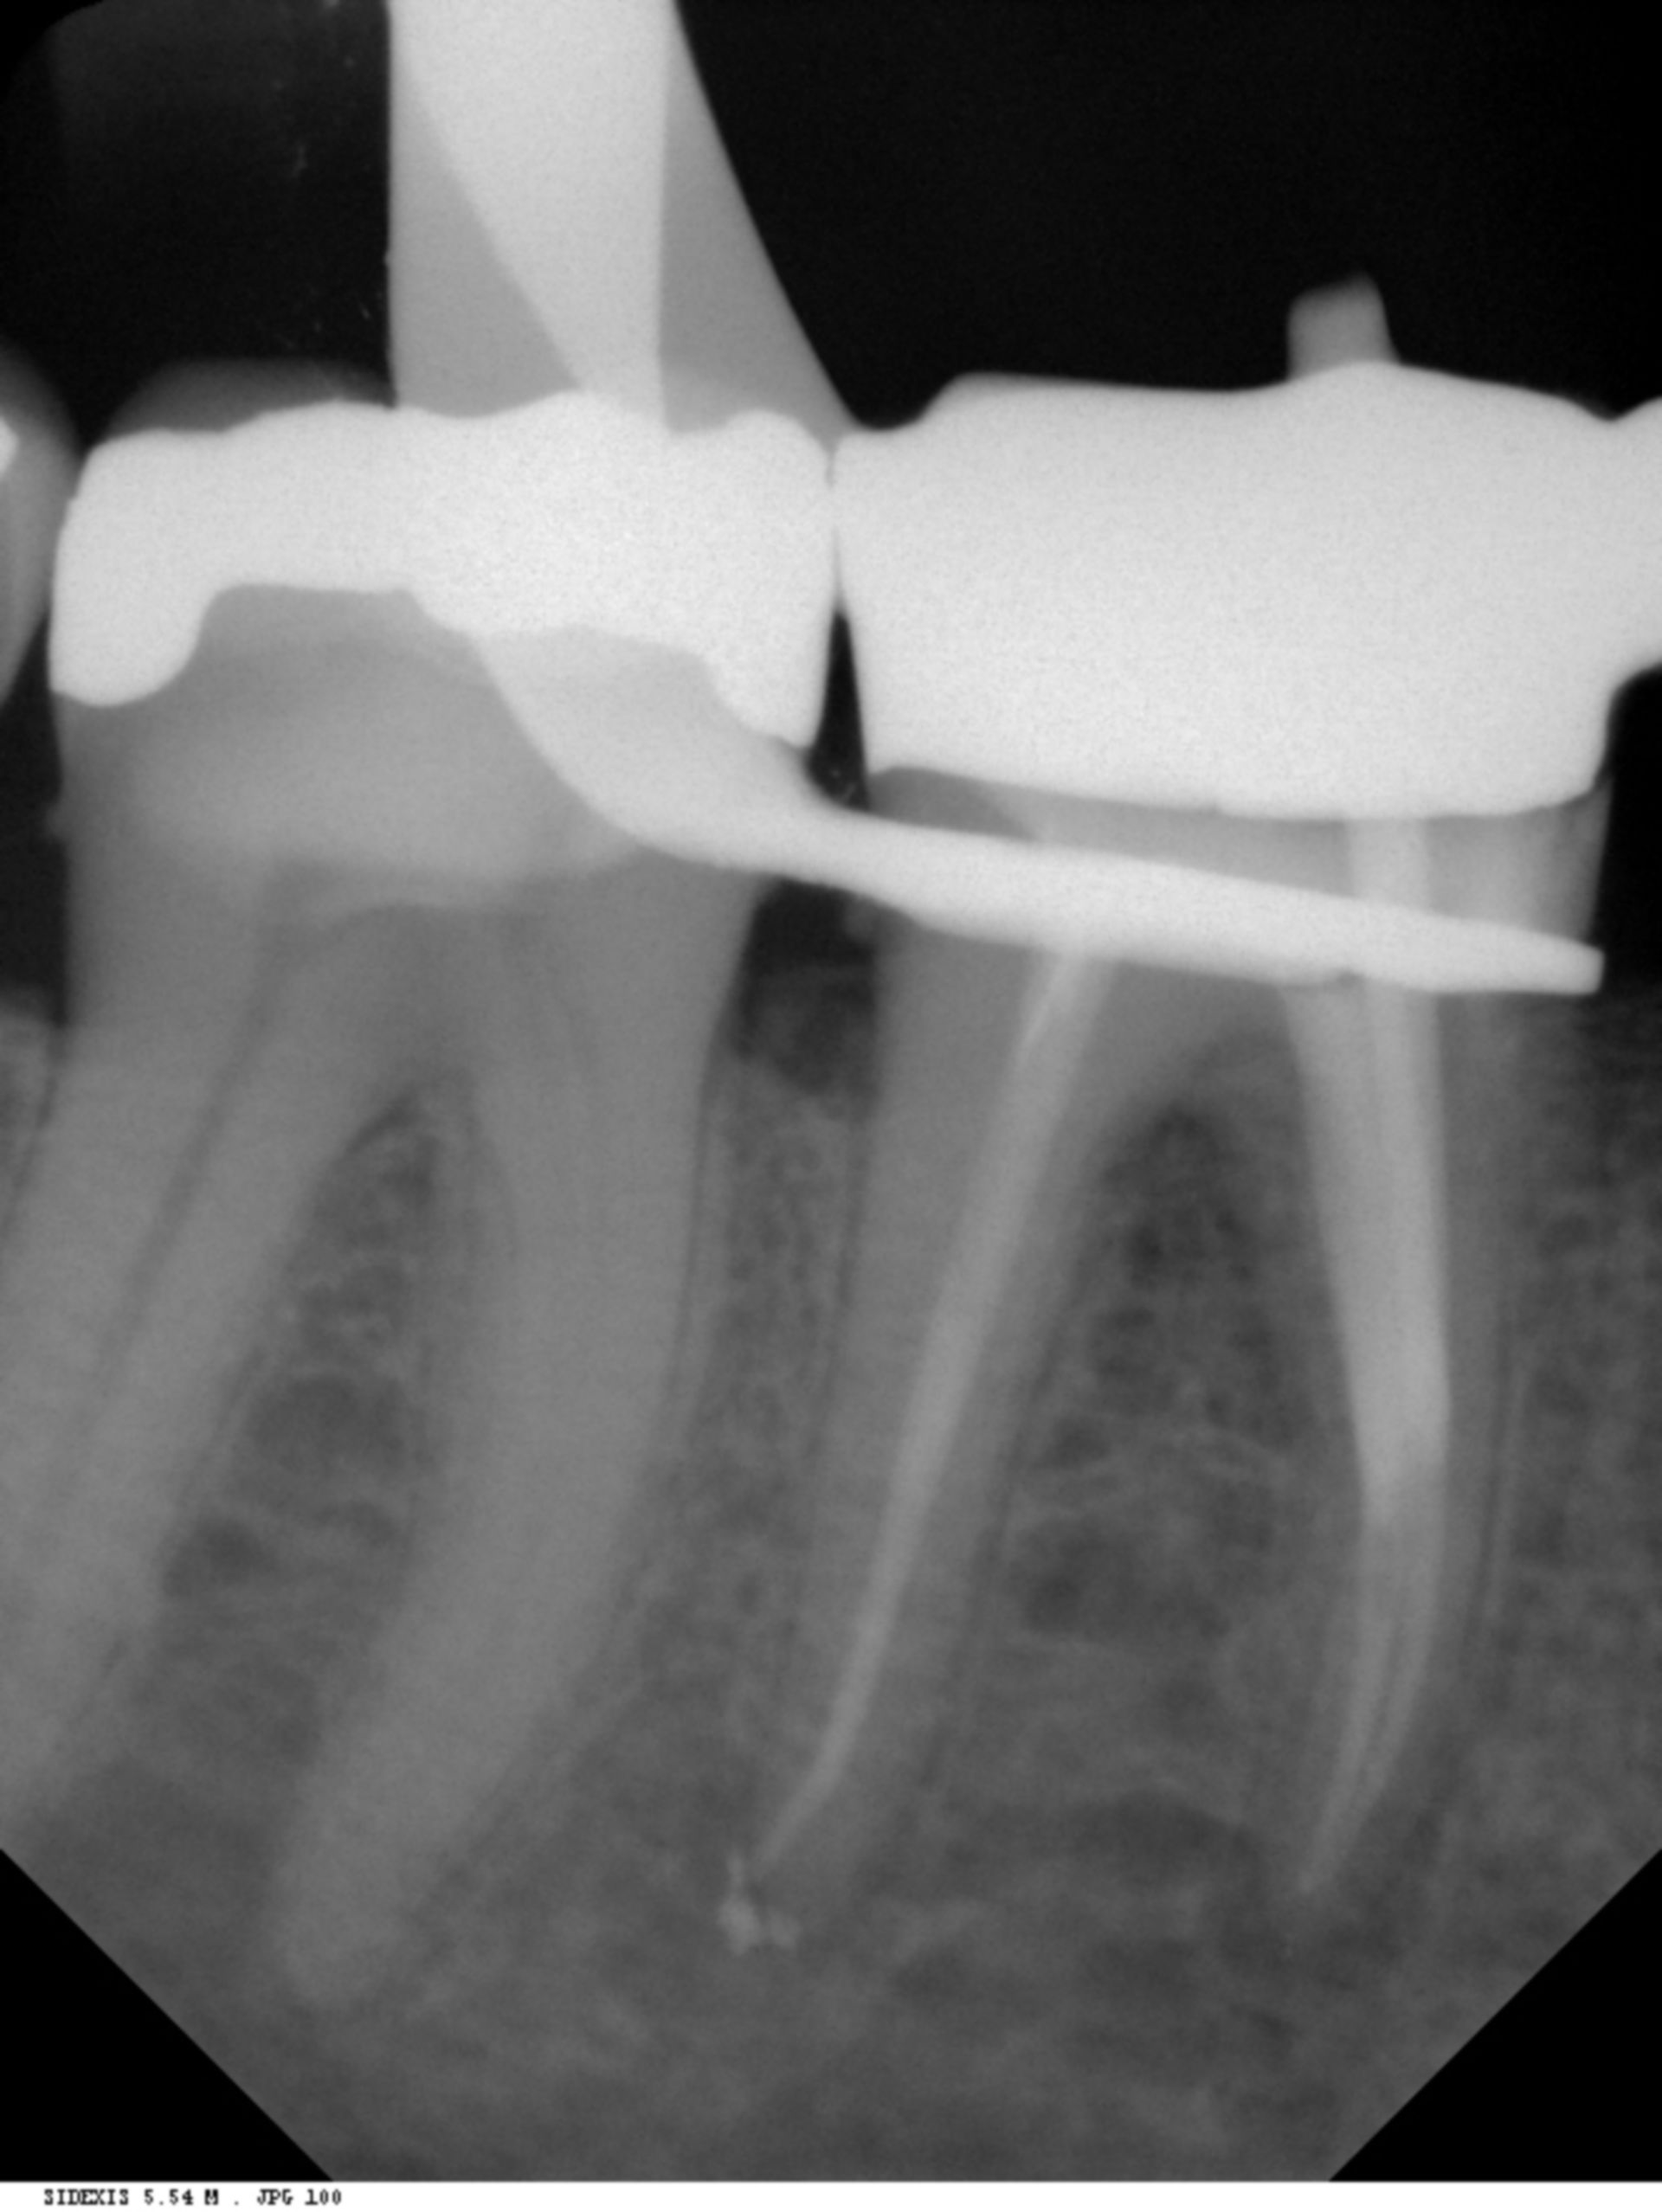 Röntgenbild: Zahn